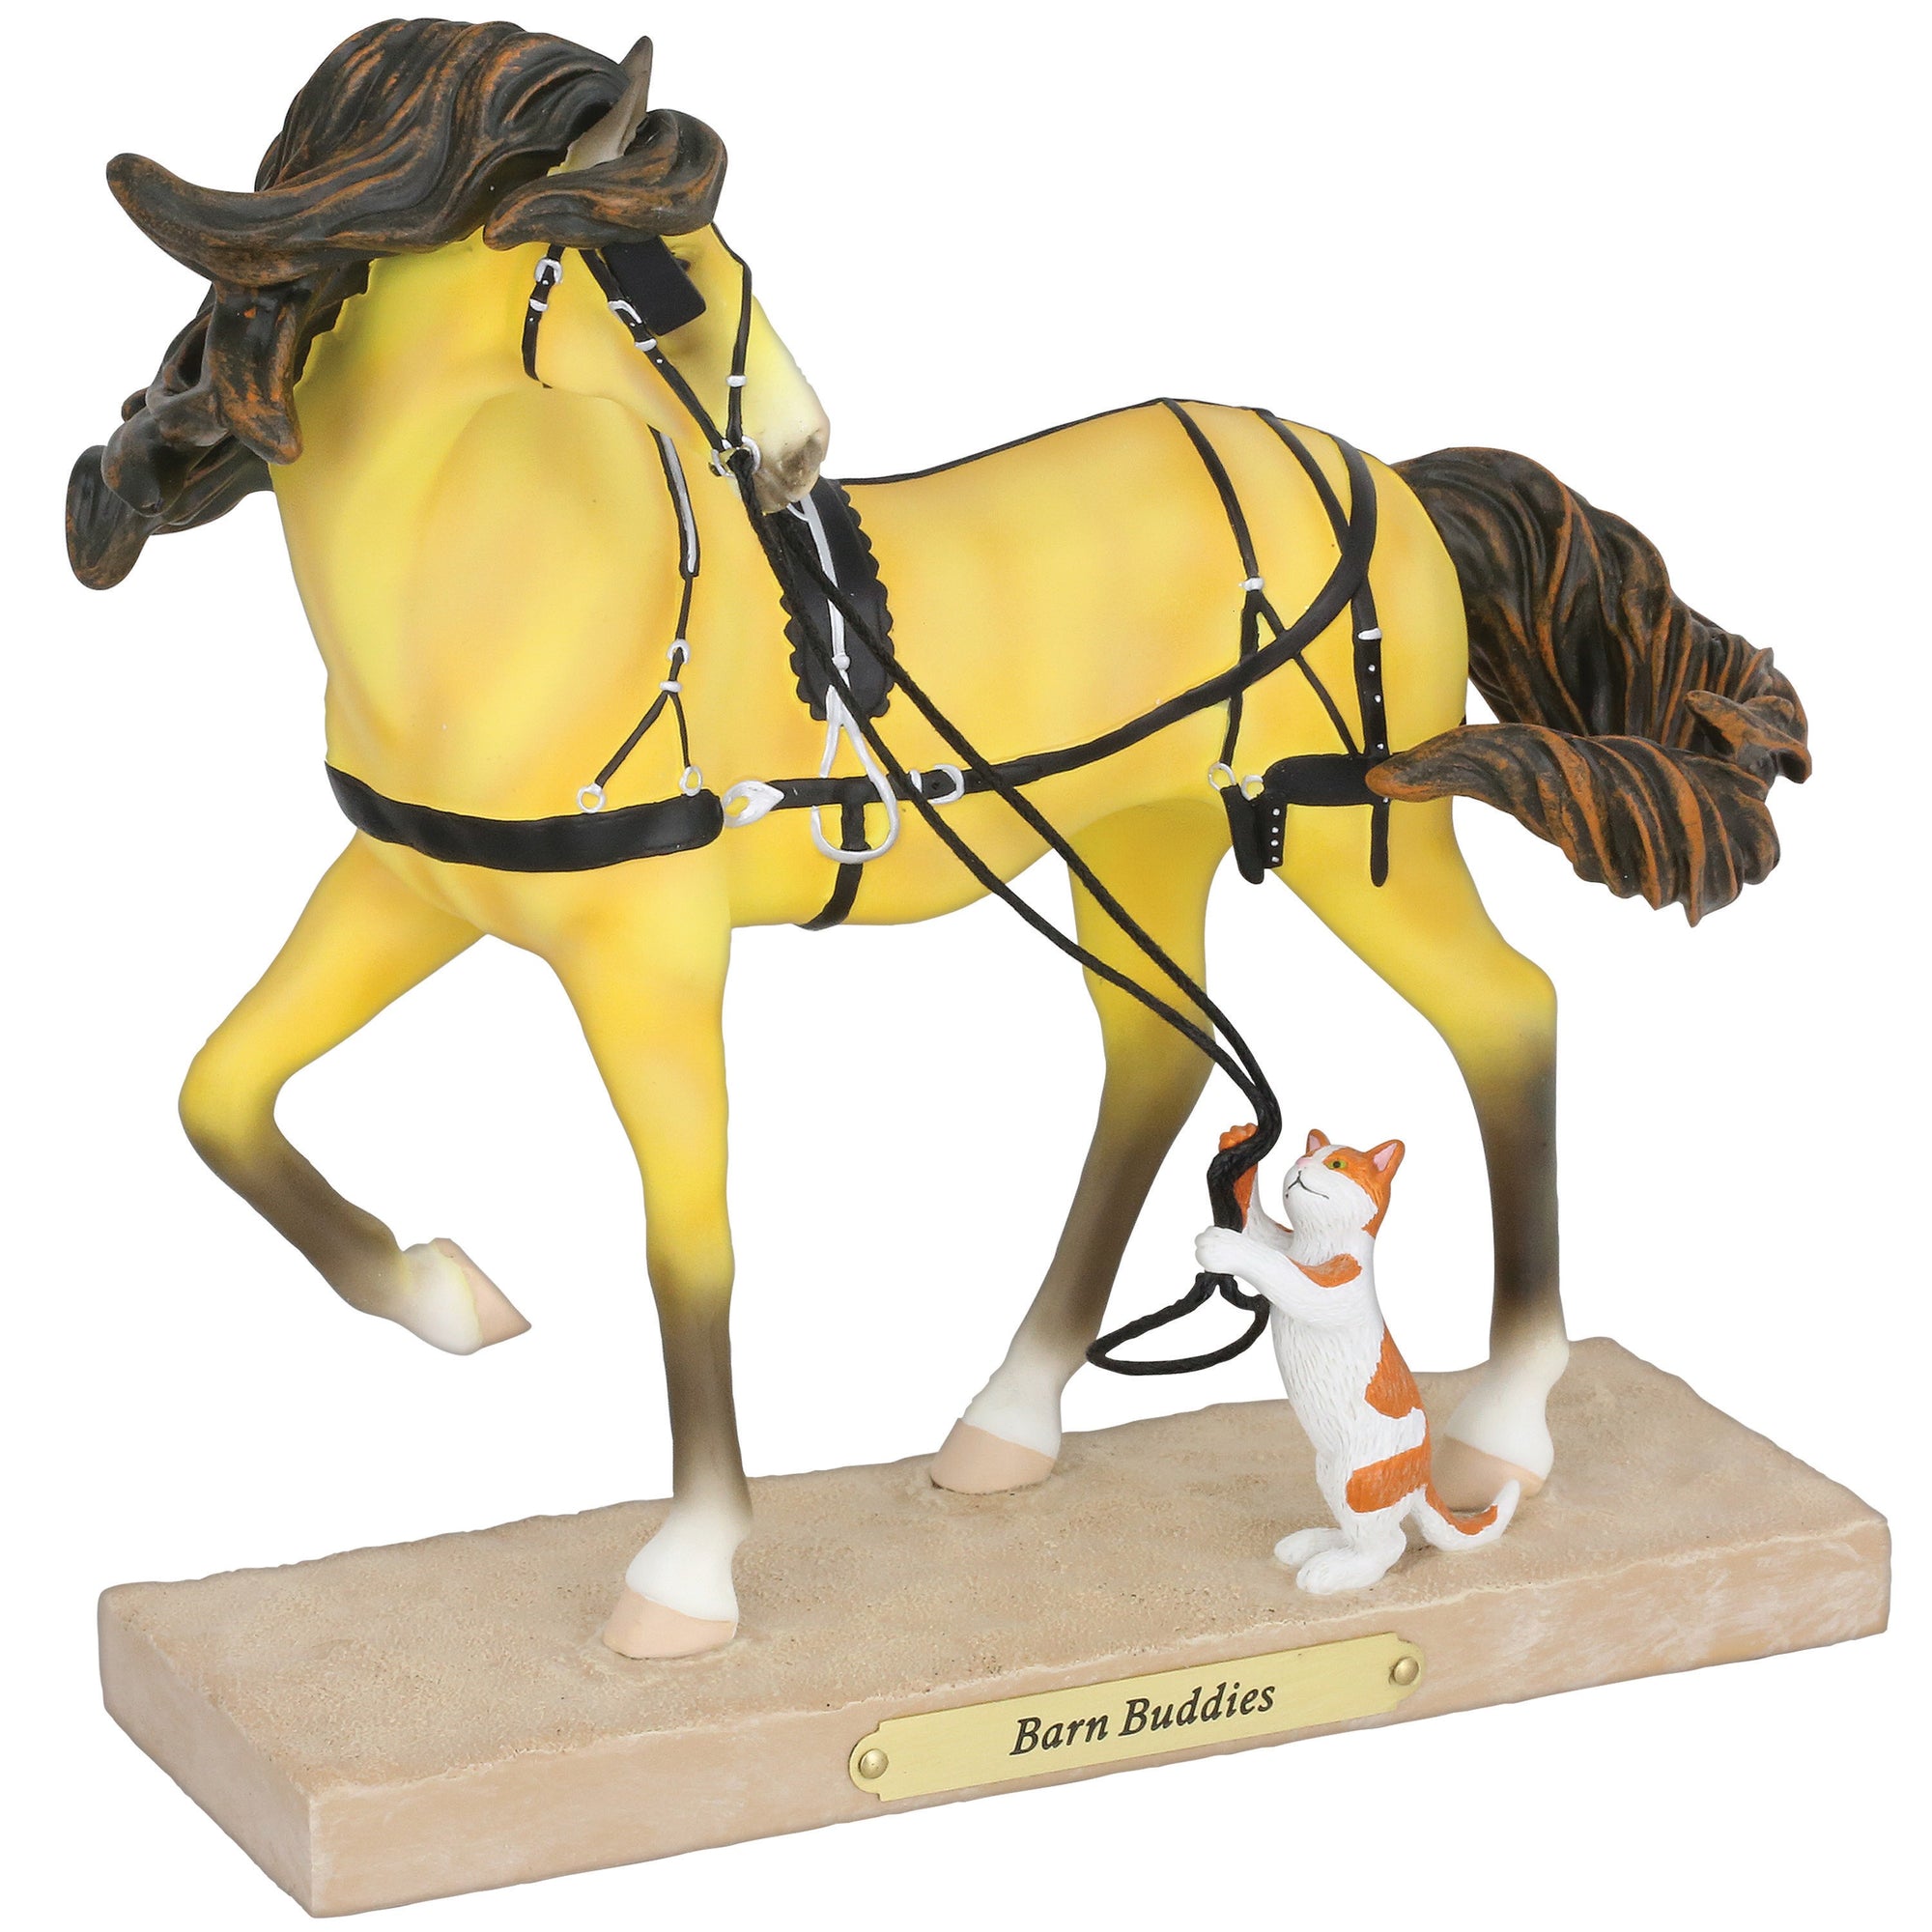 Enesco "Barn Buddies" Trail of the Painted Ponies Figurine